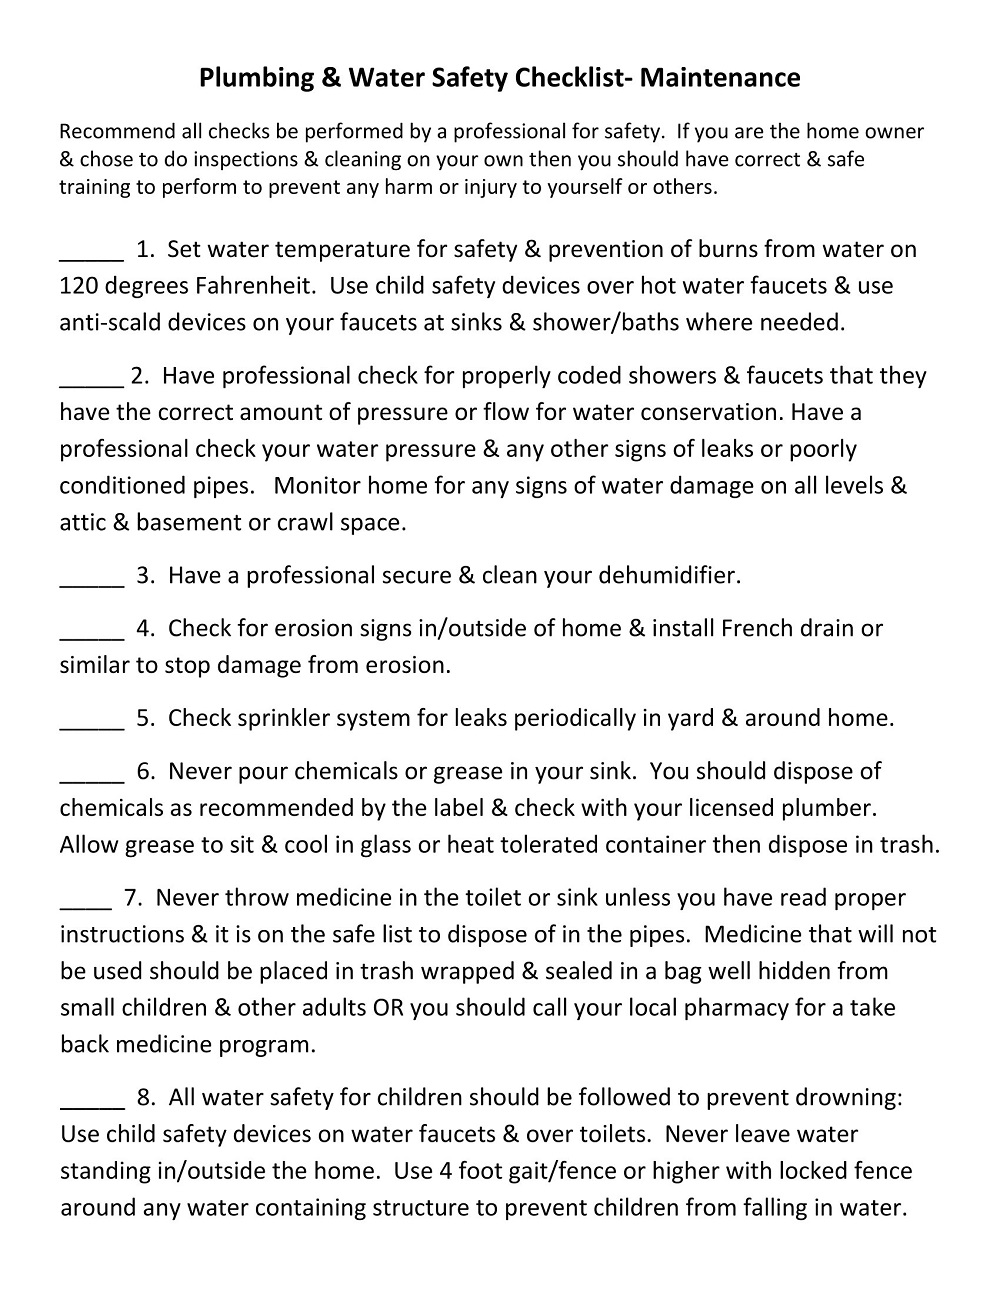 Plumbing Water Safety Maintenance Checklist